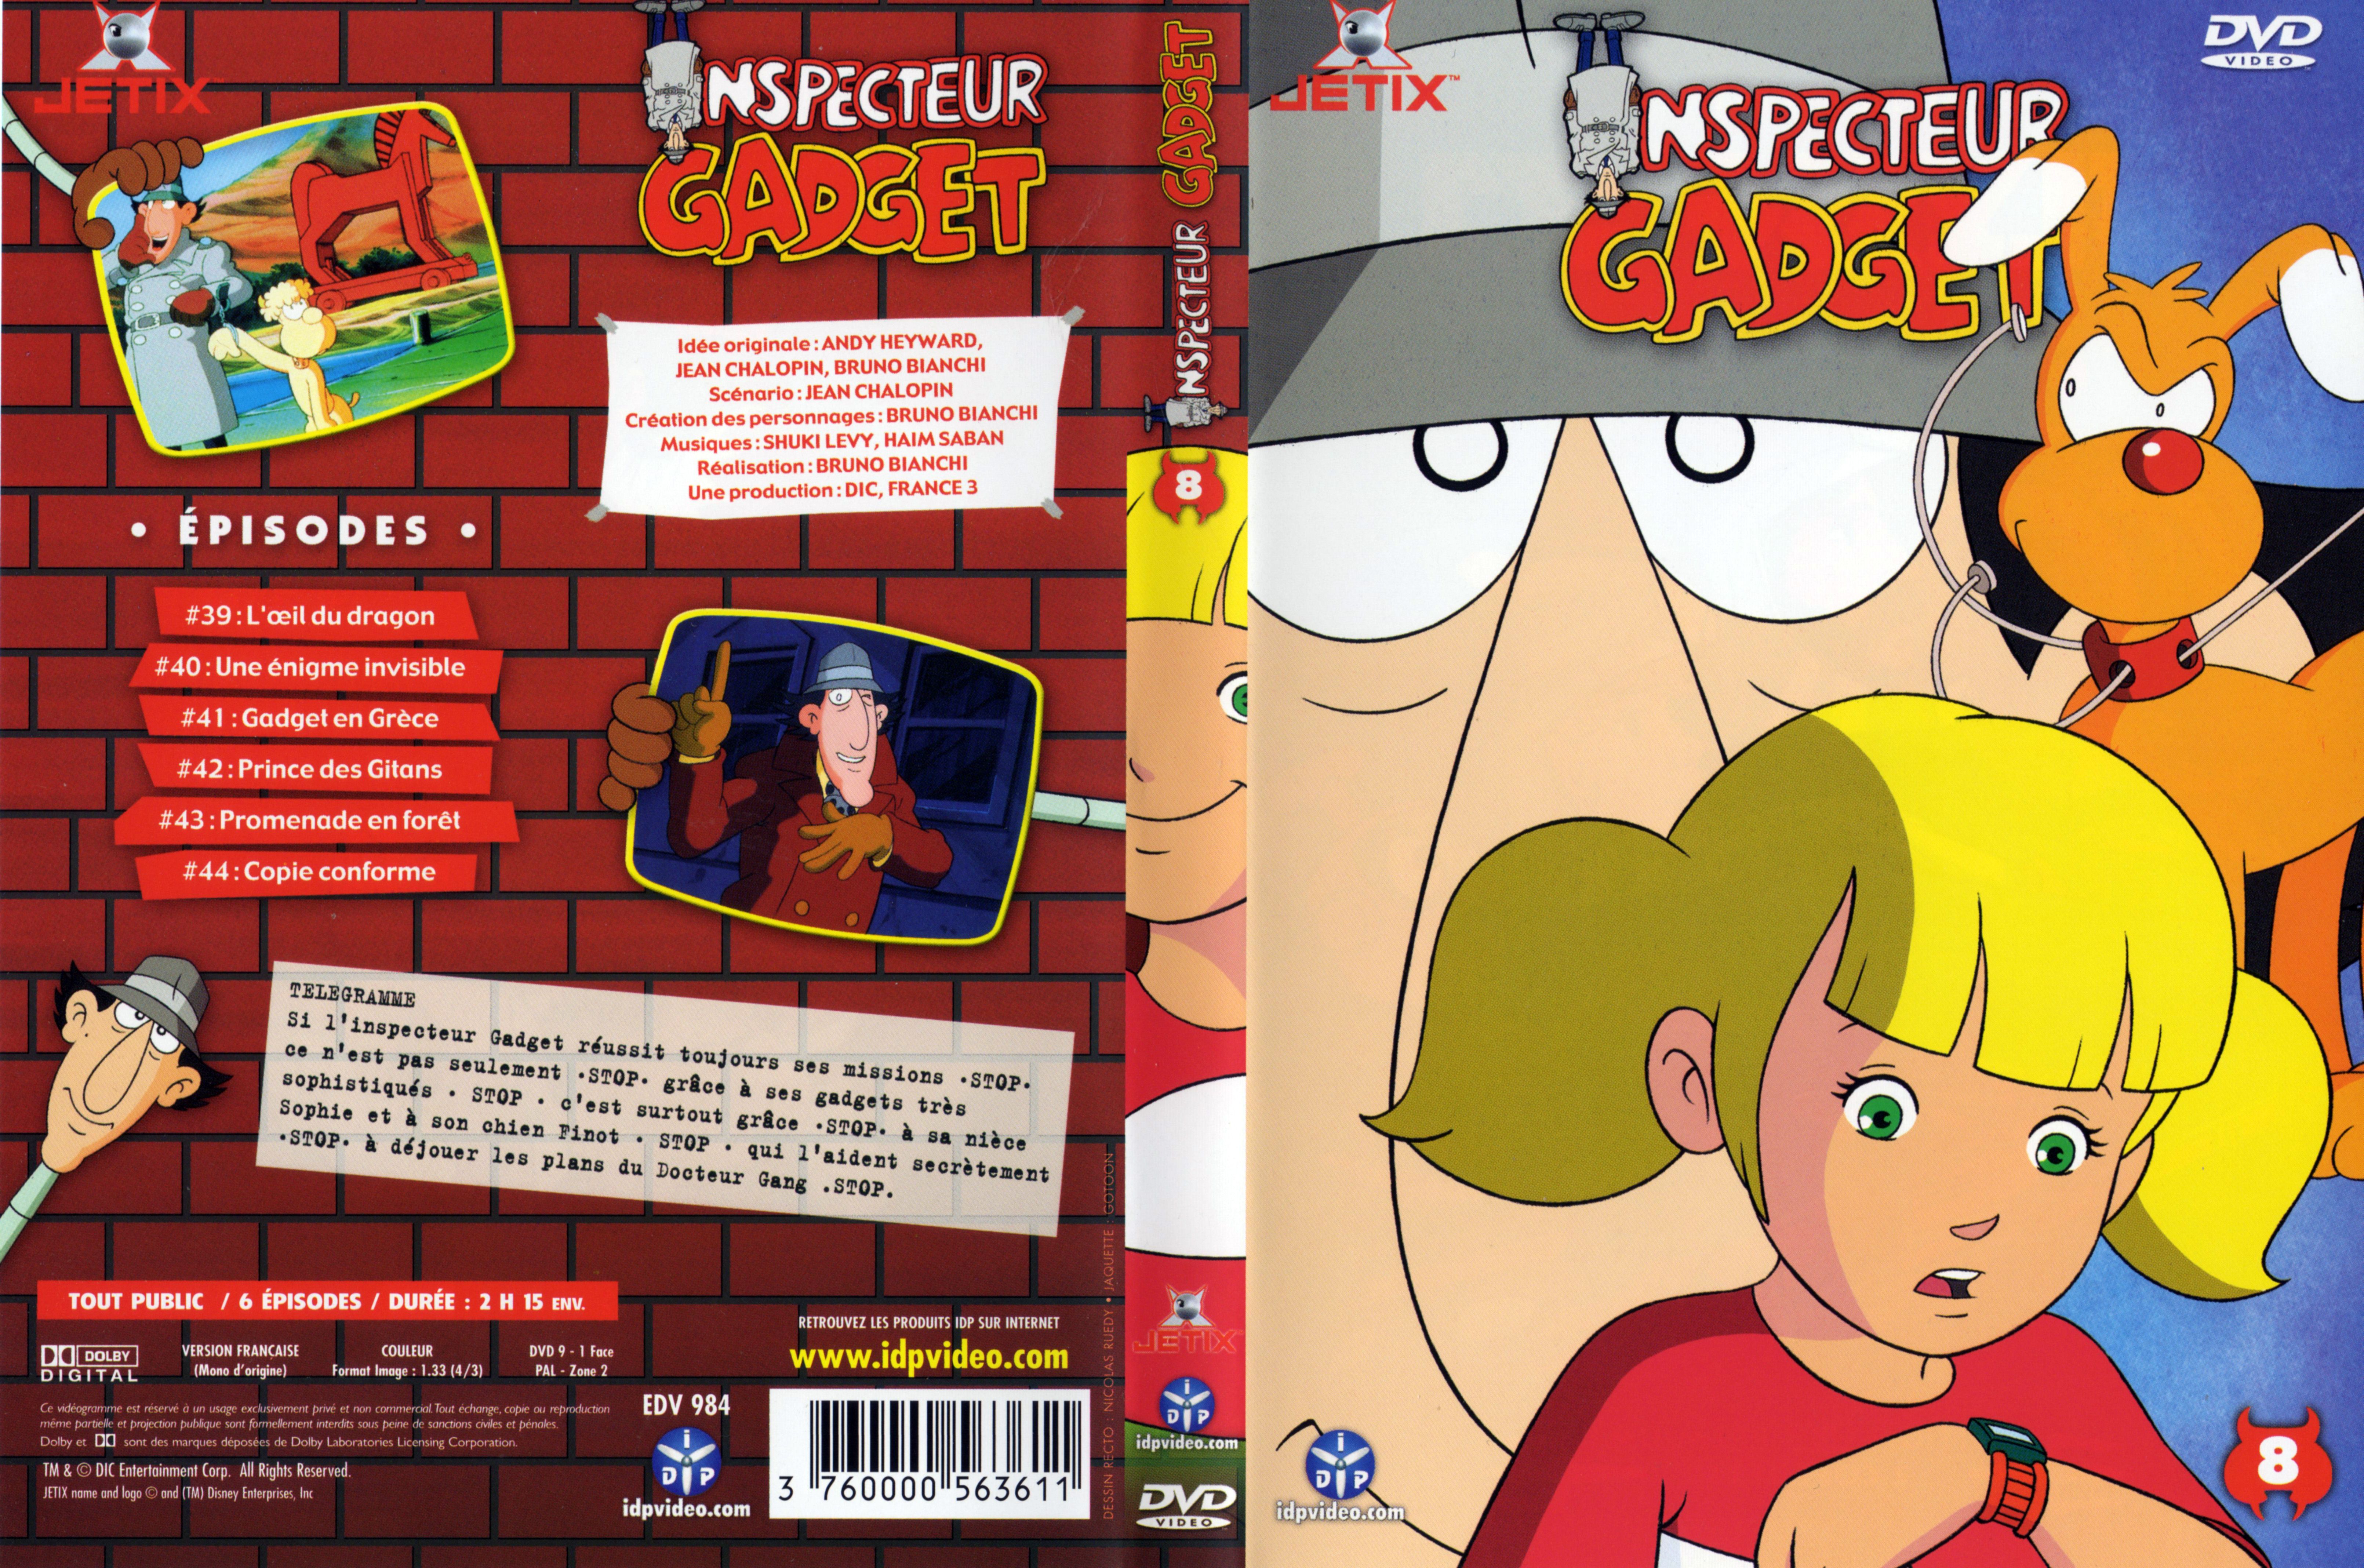 Jaquette DVD Inspecteur Gadget vol 08